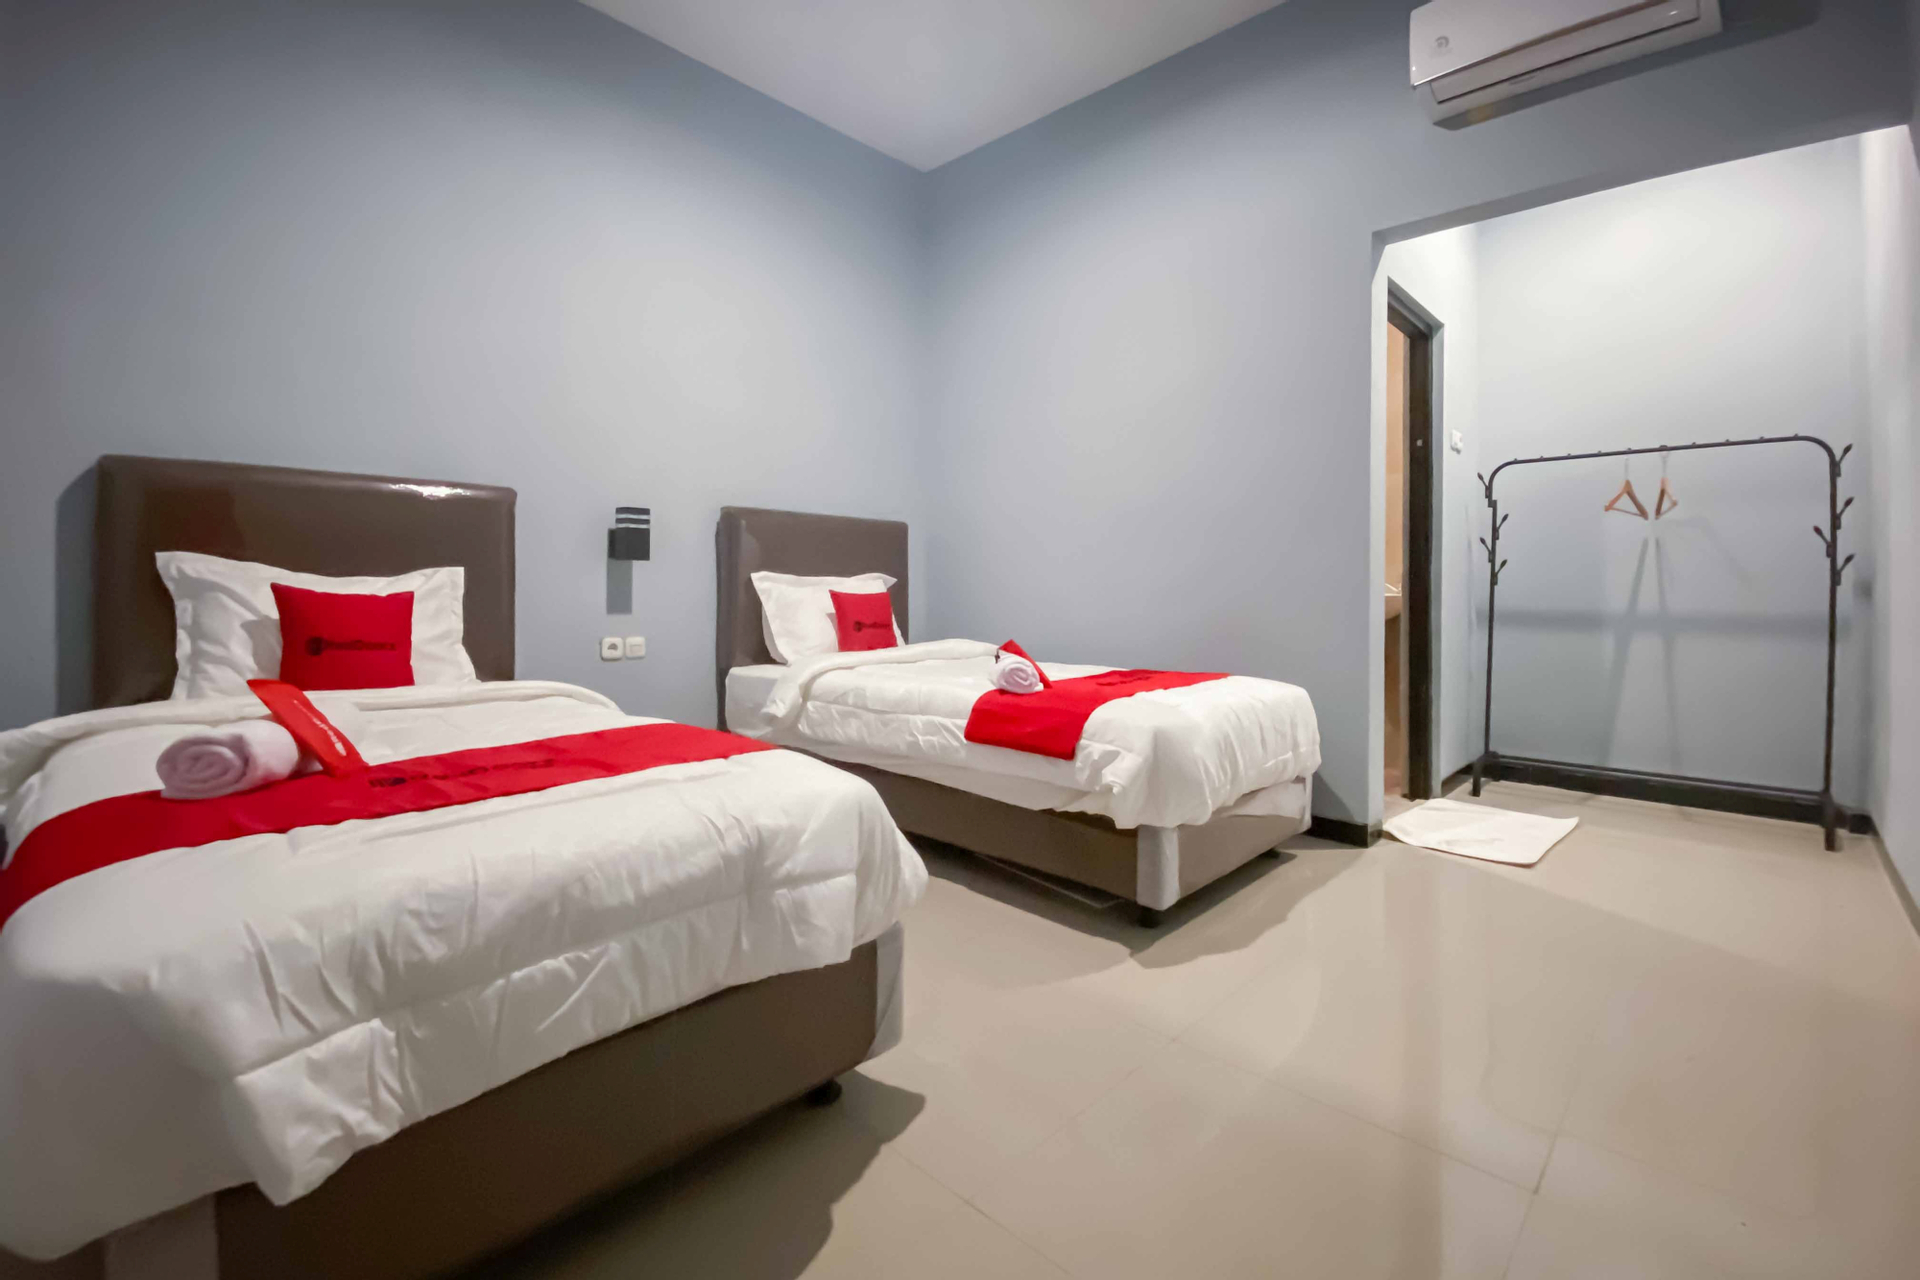 Bedroom 3, RedDoorz Syariah near T2 Juanda Airport 2, Surabaya